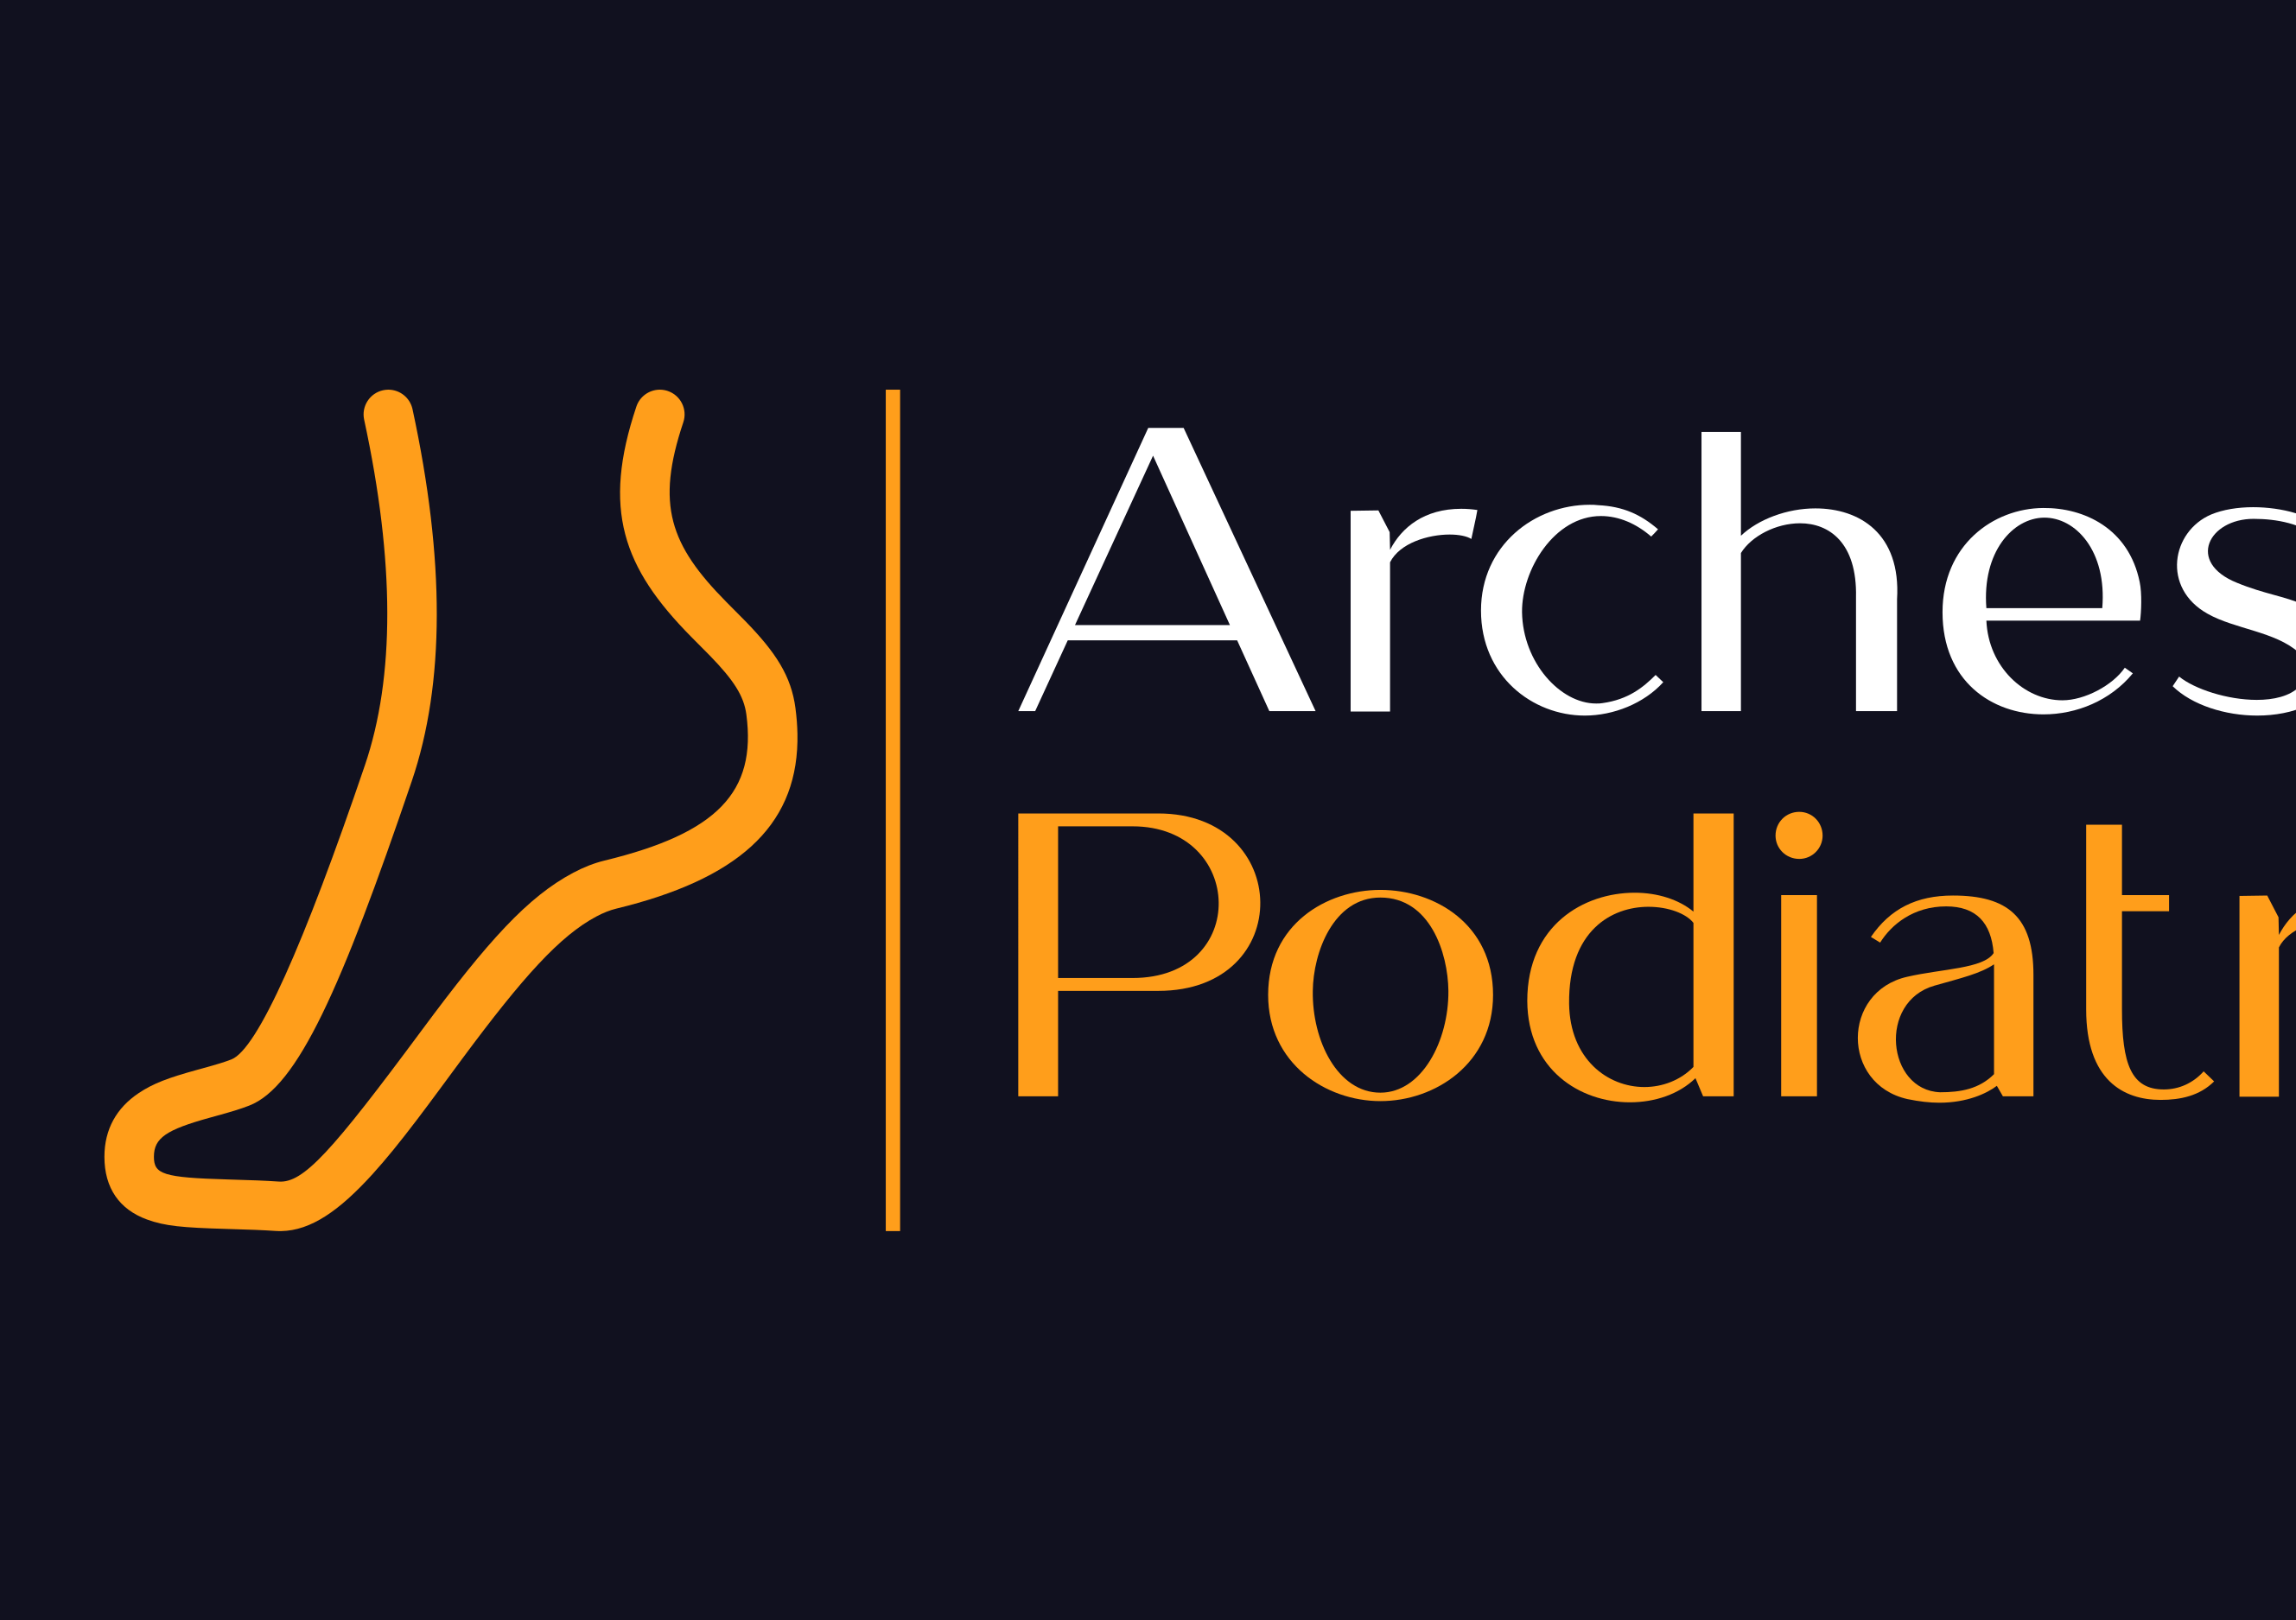 Arches Podiarty